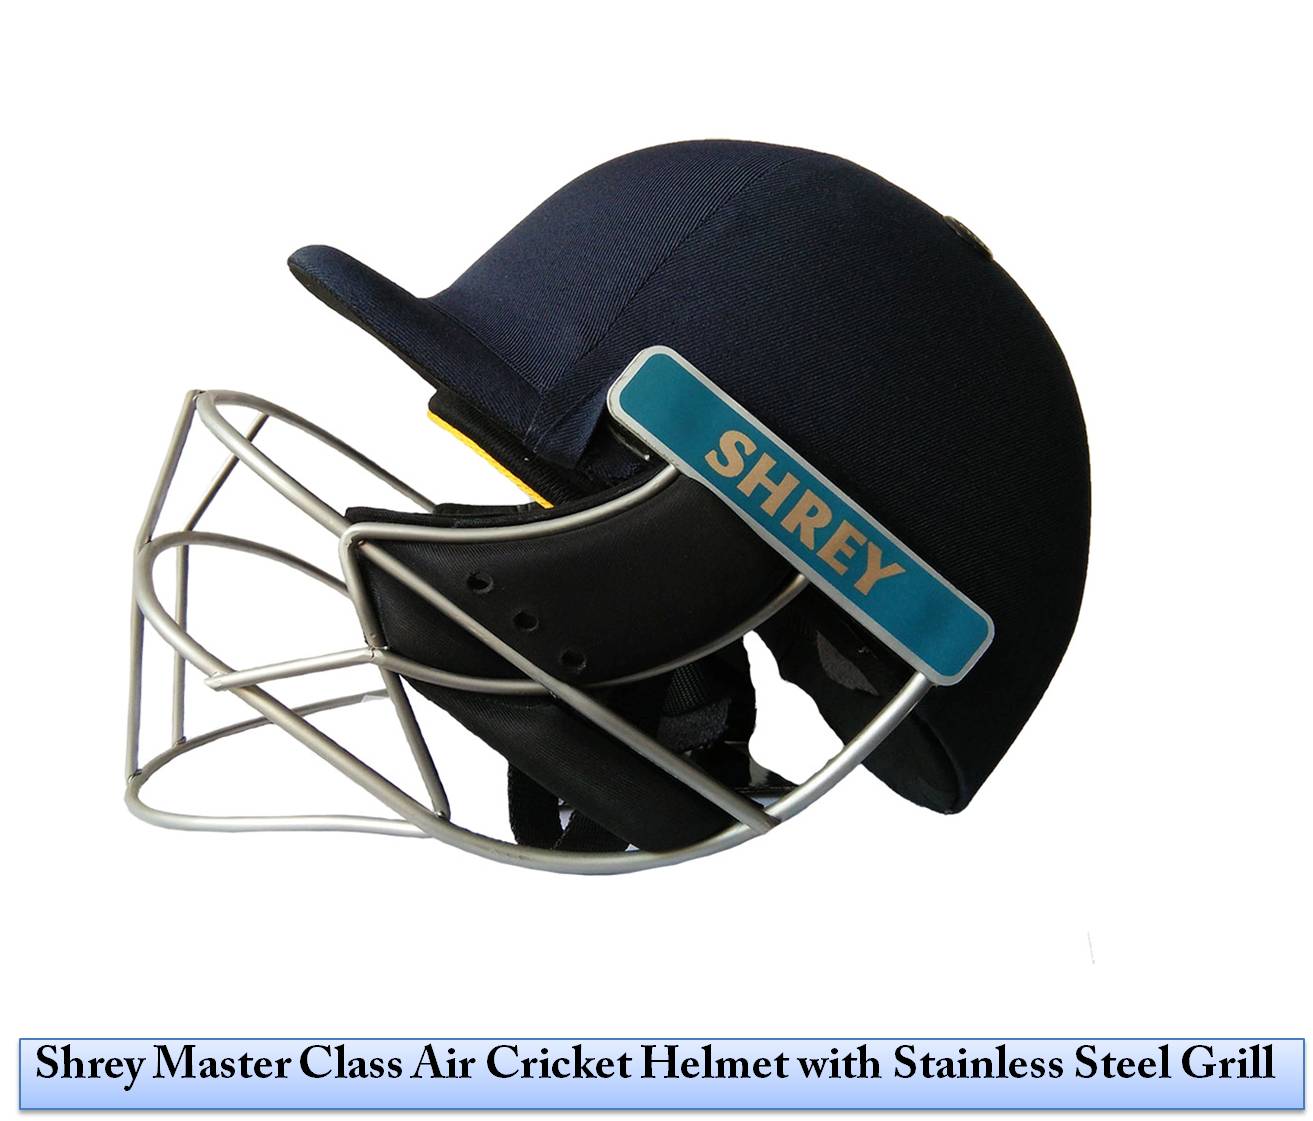  Shrey_Master_Class_Air_Cricket_Helmet 